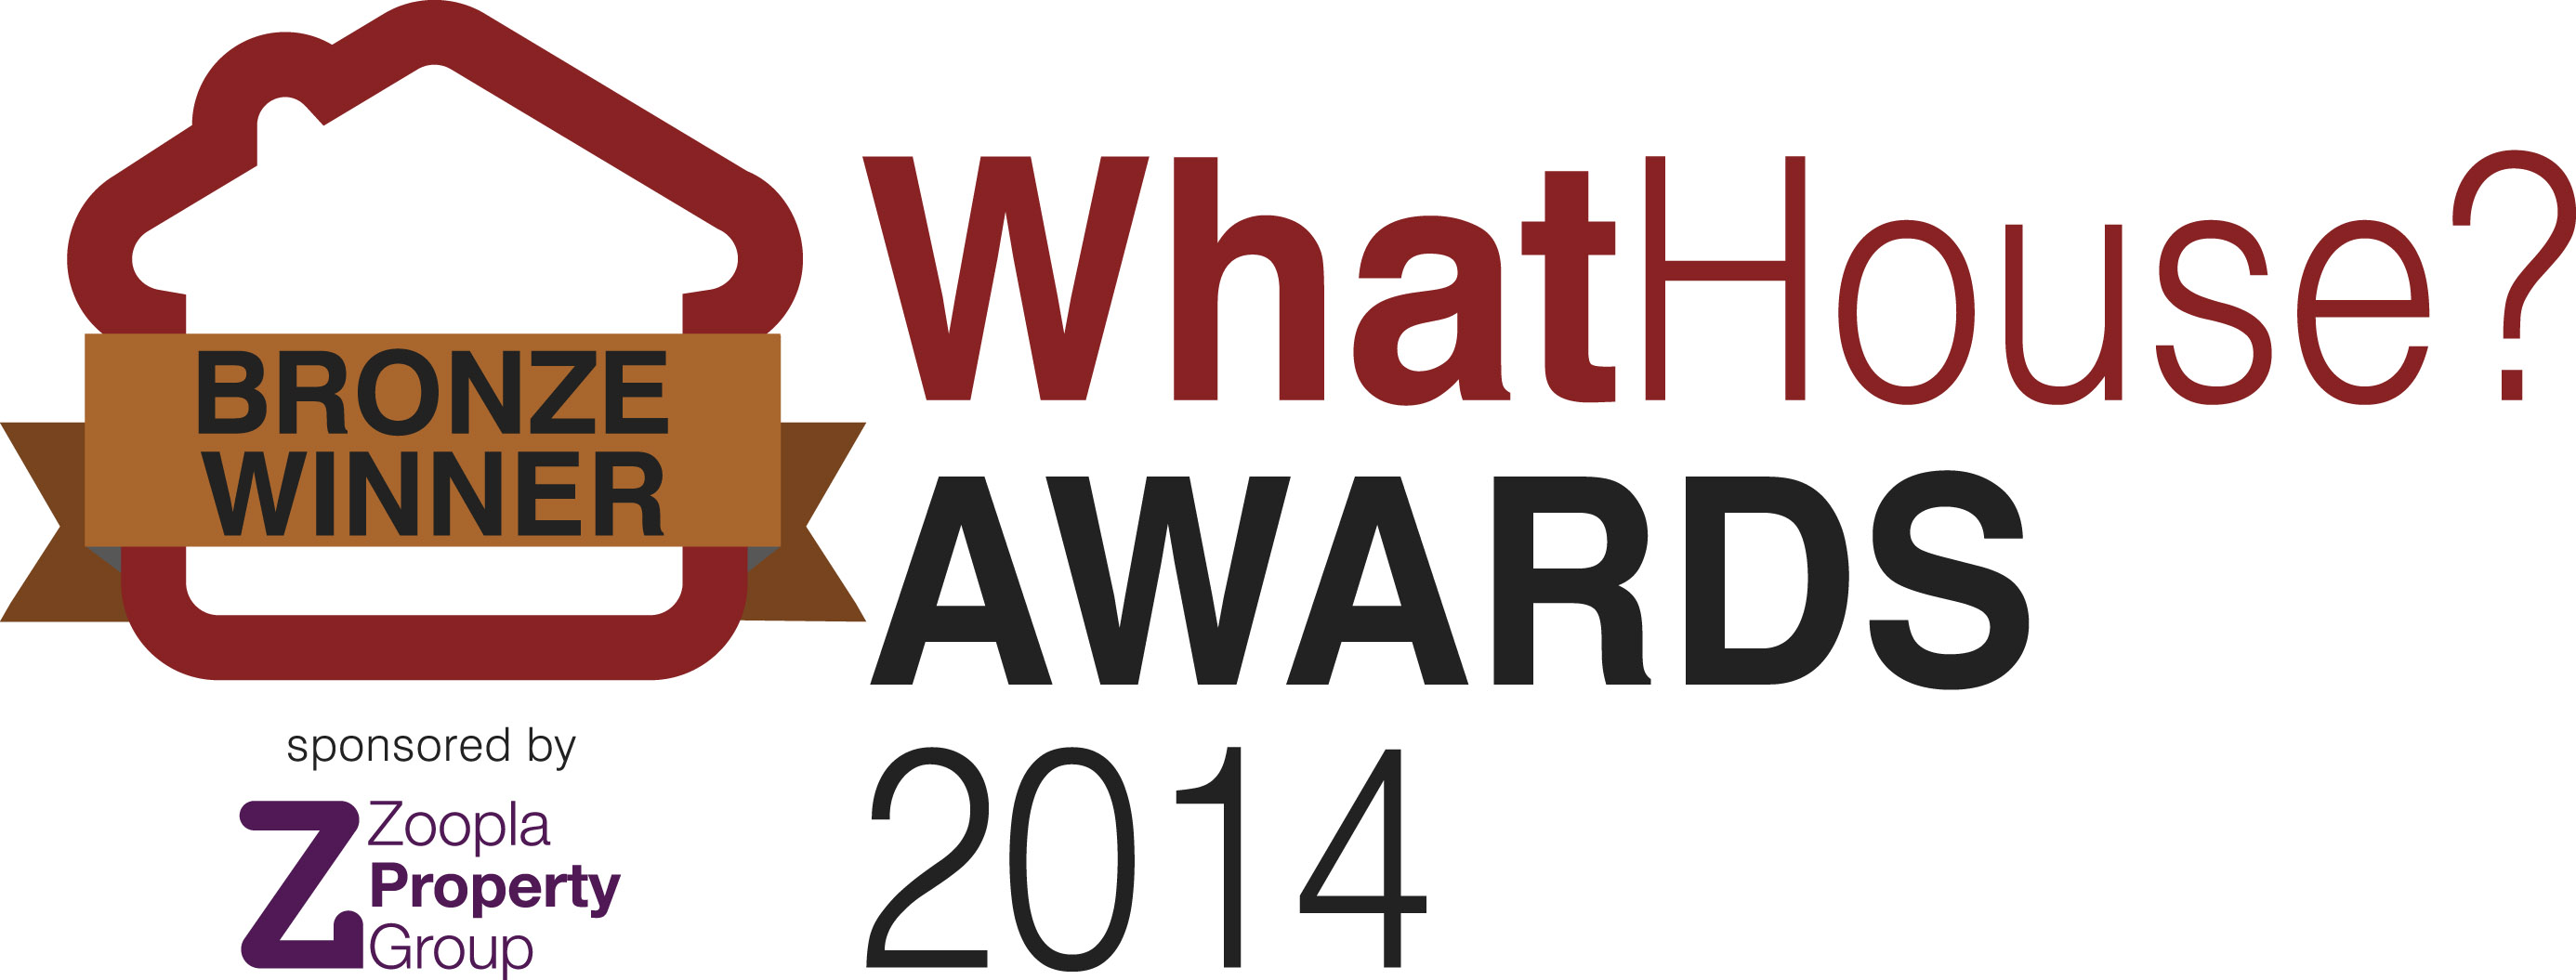 WhatHouse? Awards Winner Bronze 2014